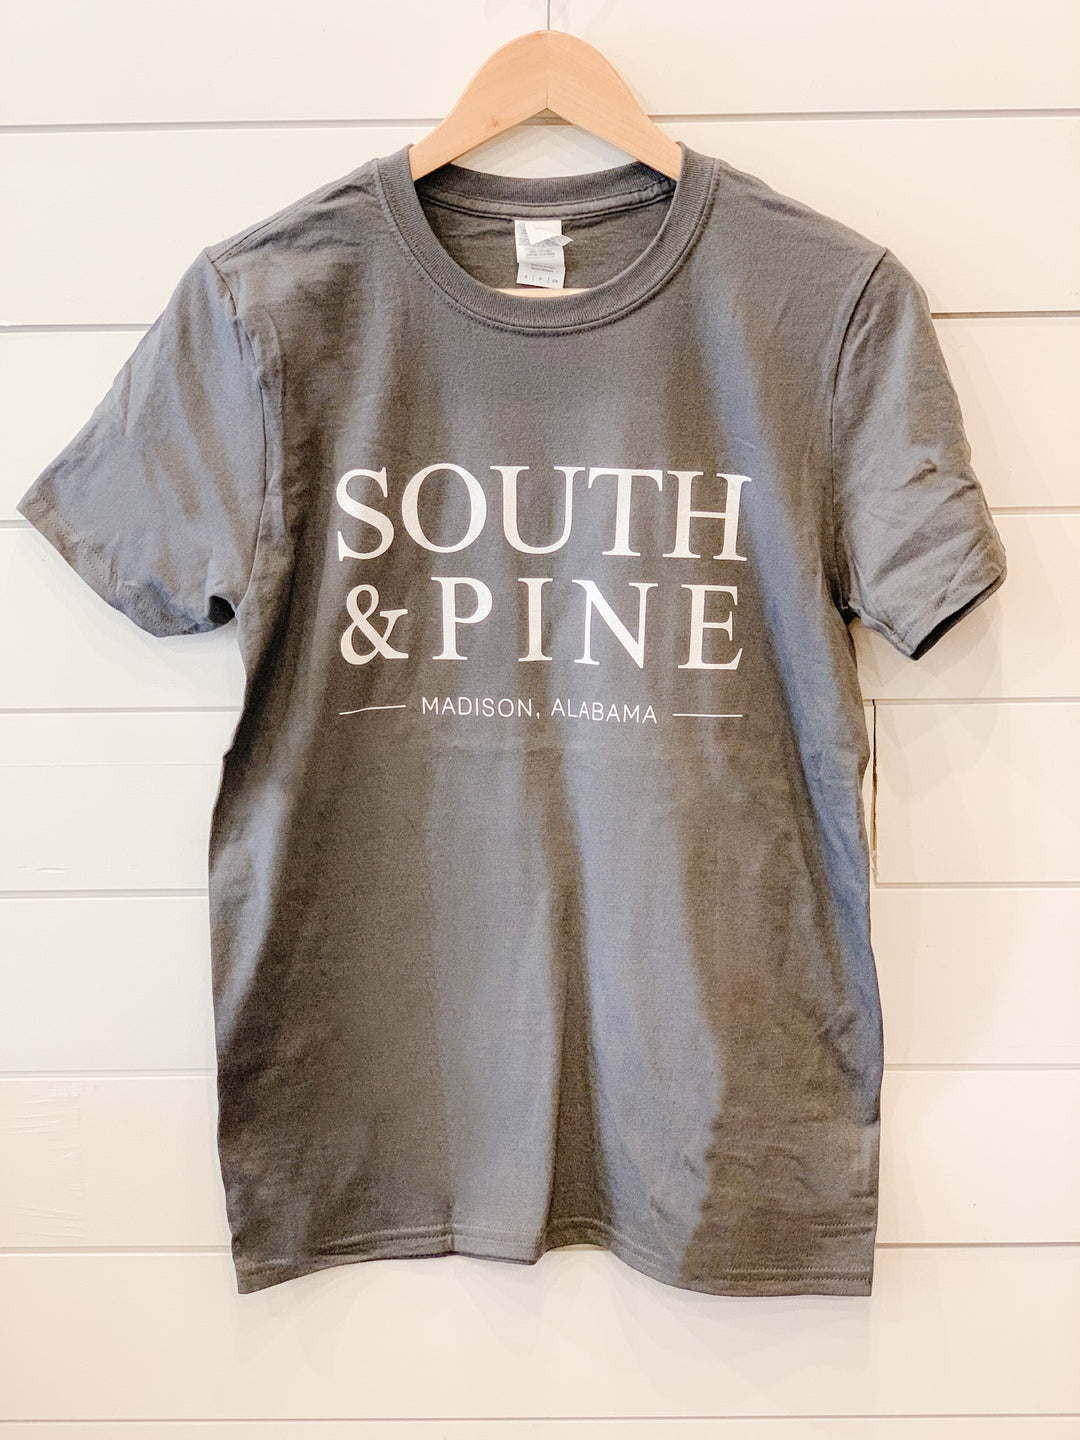 South & Pine T-Shirt - Charcoal & White